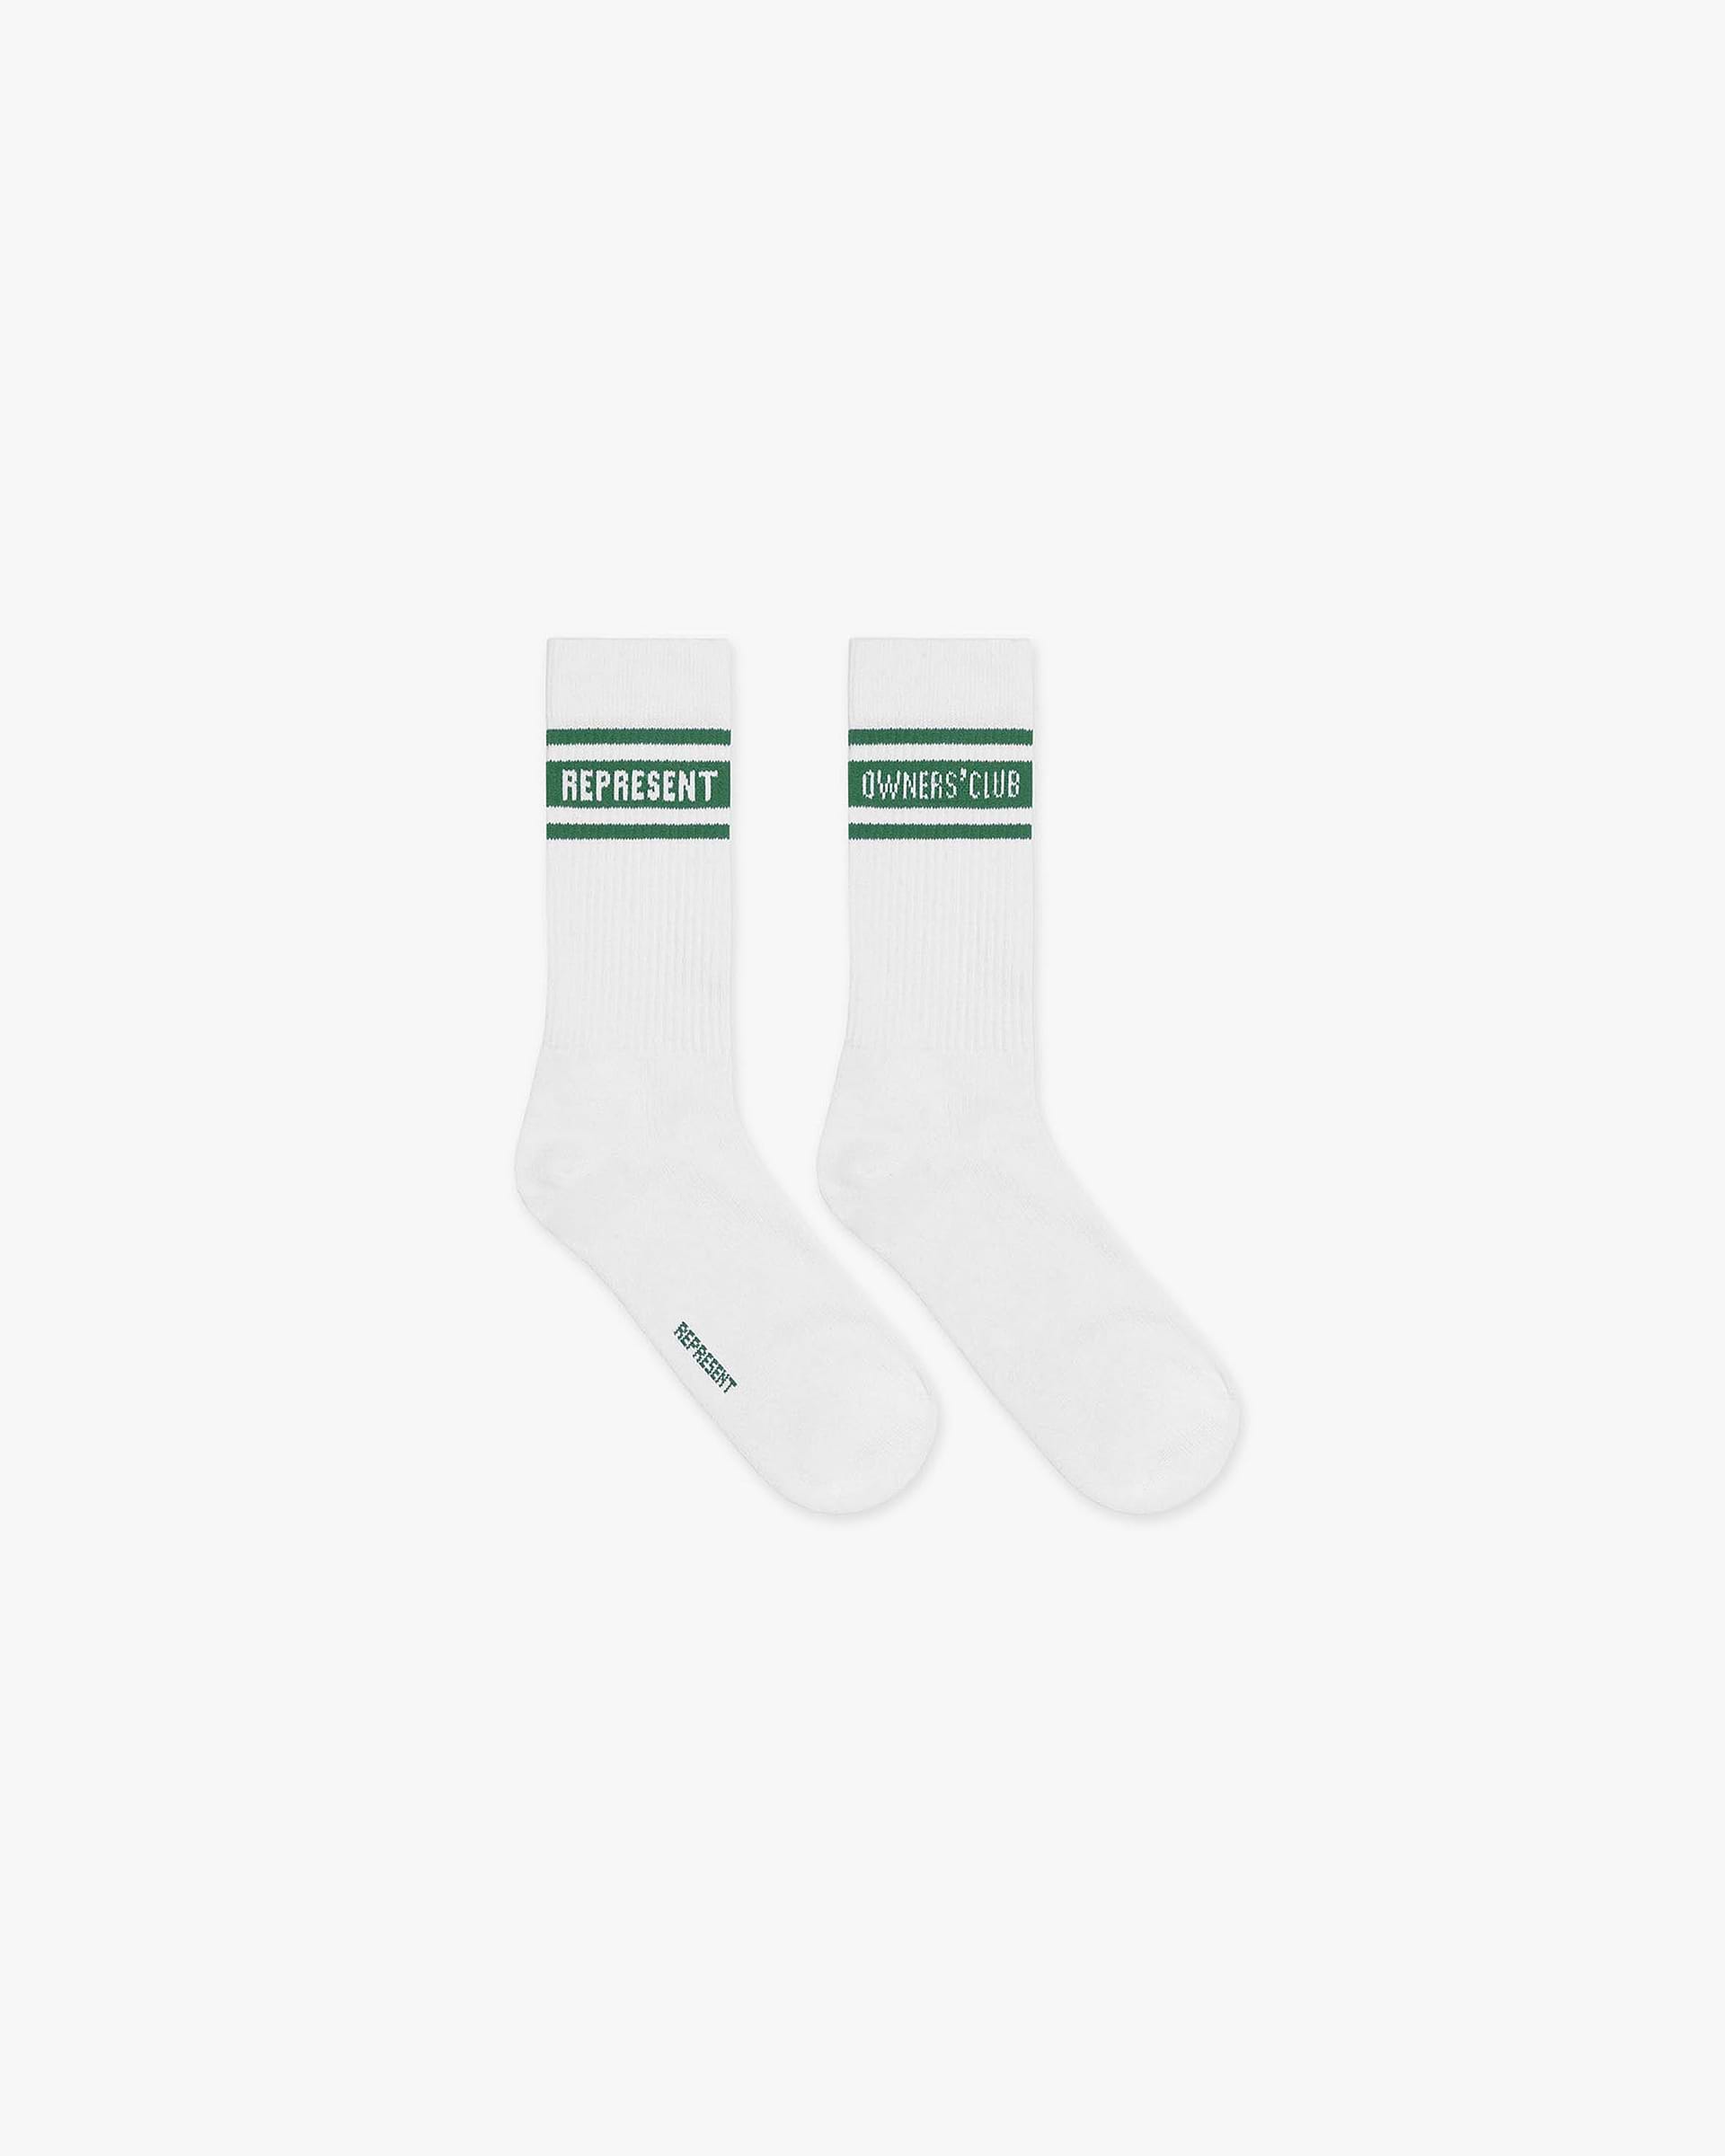 Represent Owners Club Socks - Flat White Racing Green